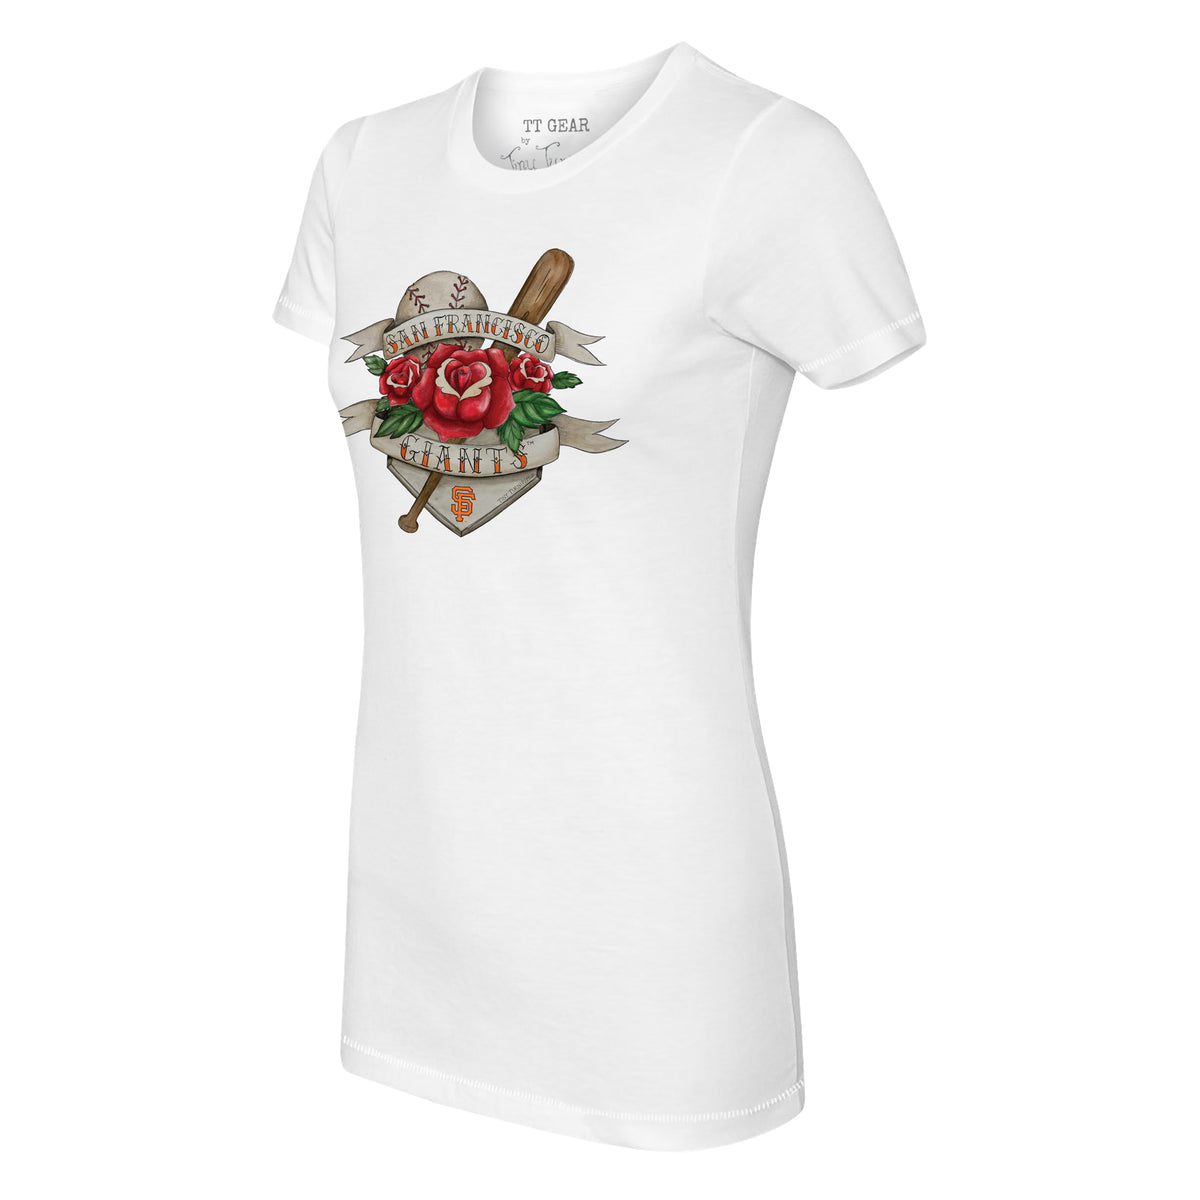 San Francisco Giants Tattoo Rose Tee Shirt